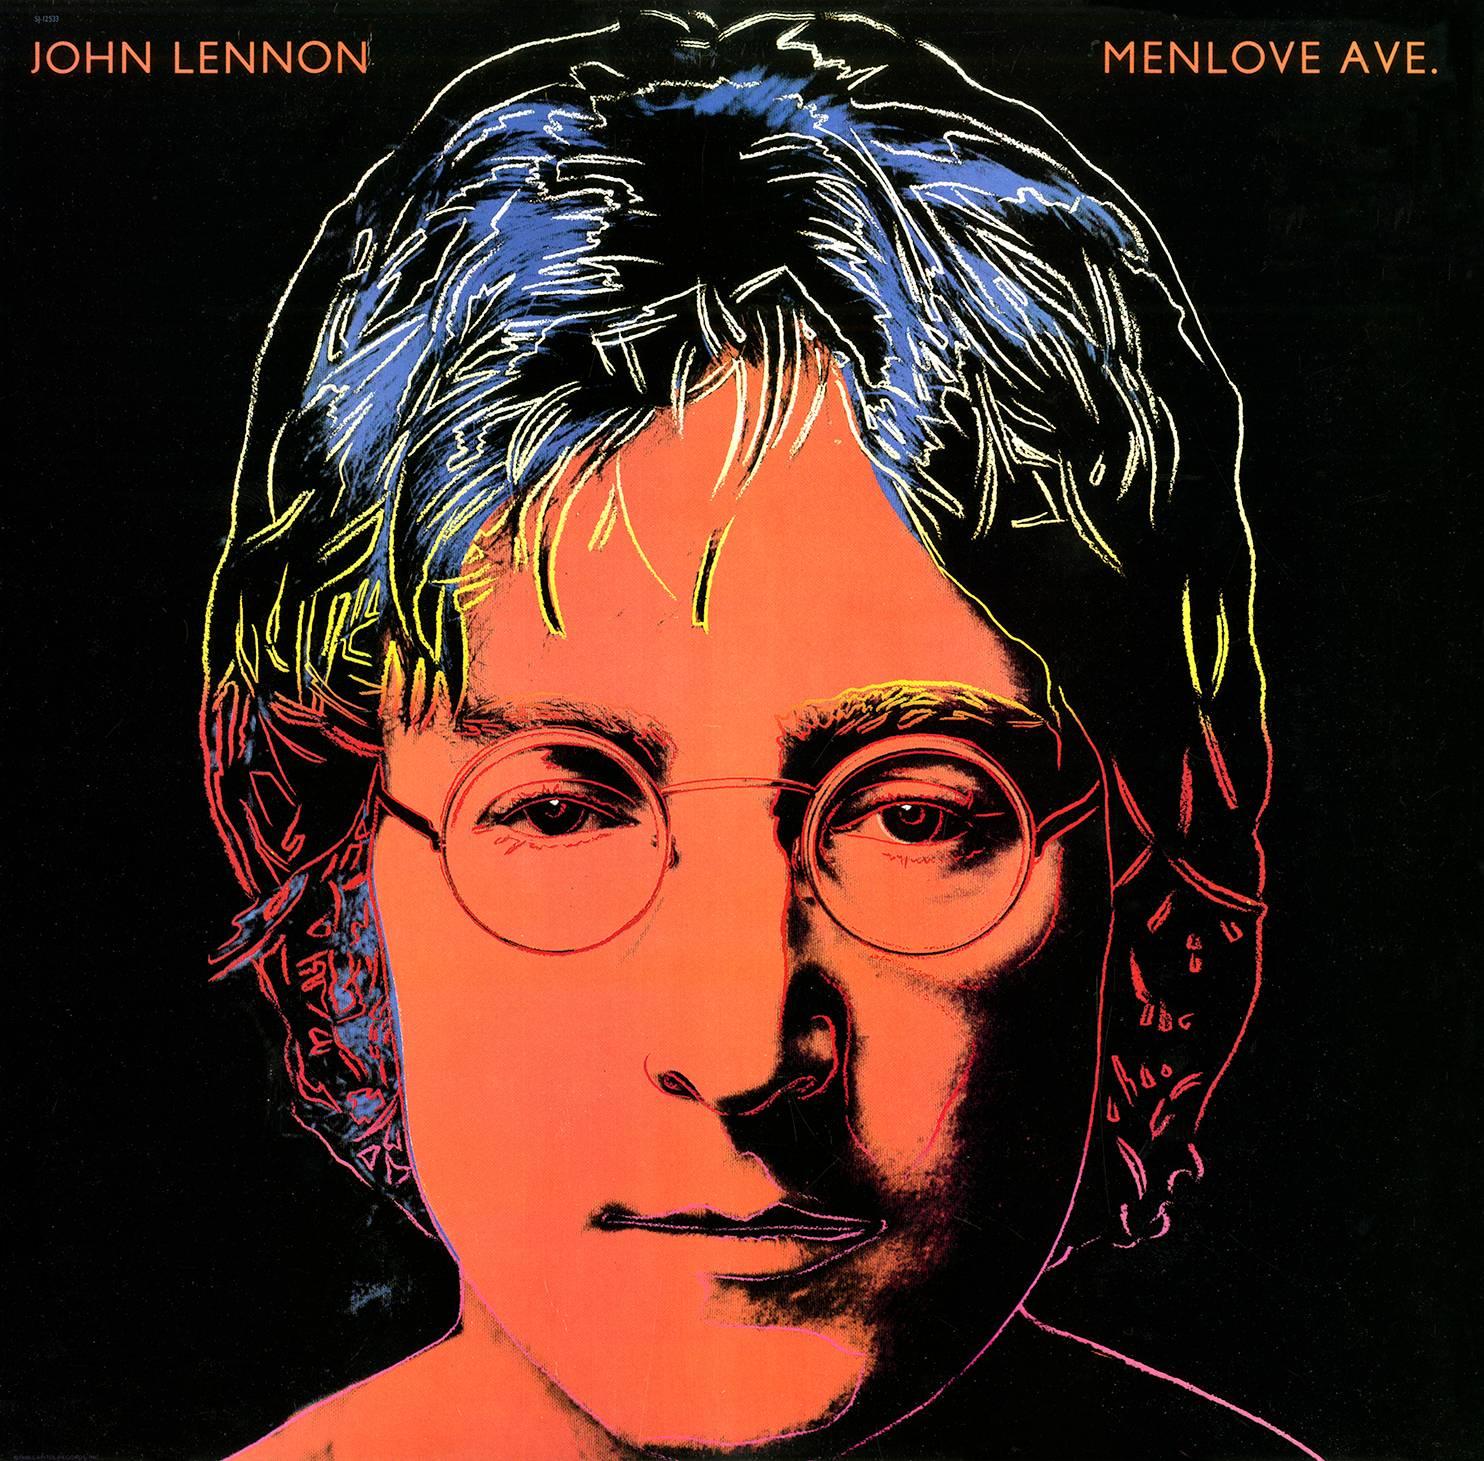 Andy Warhol designed record cover 1986 (John Lennon menlove ave)